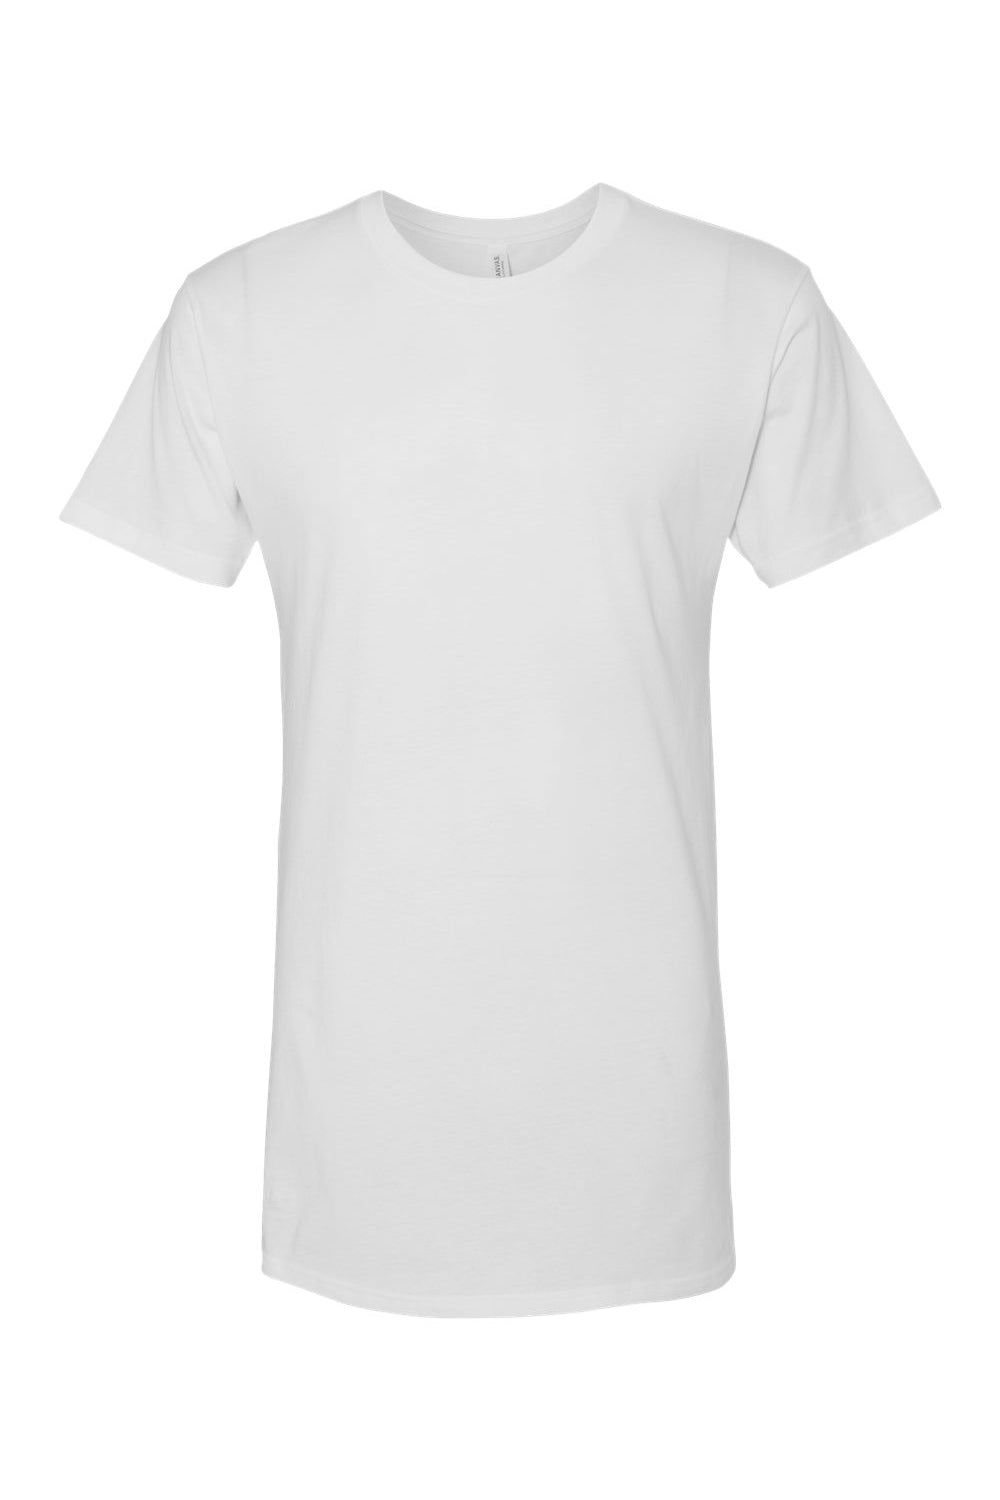 Bella + Canvas 3006 Mens Long Body Urban Short Sleeve Crewneck T-Shirt White Flat Front